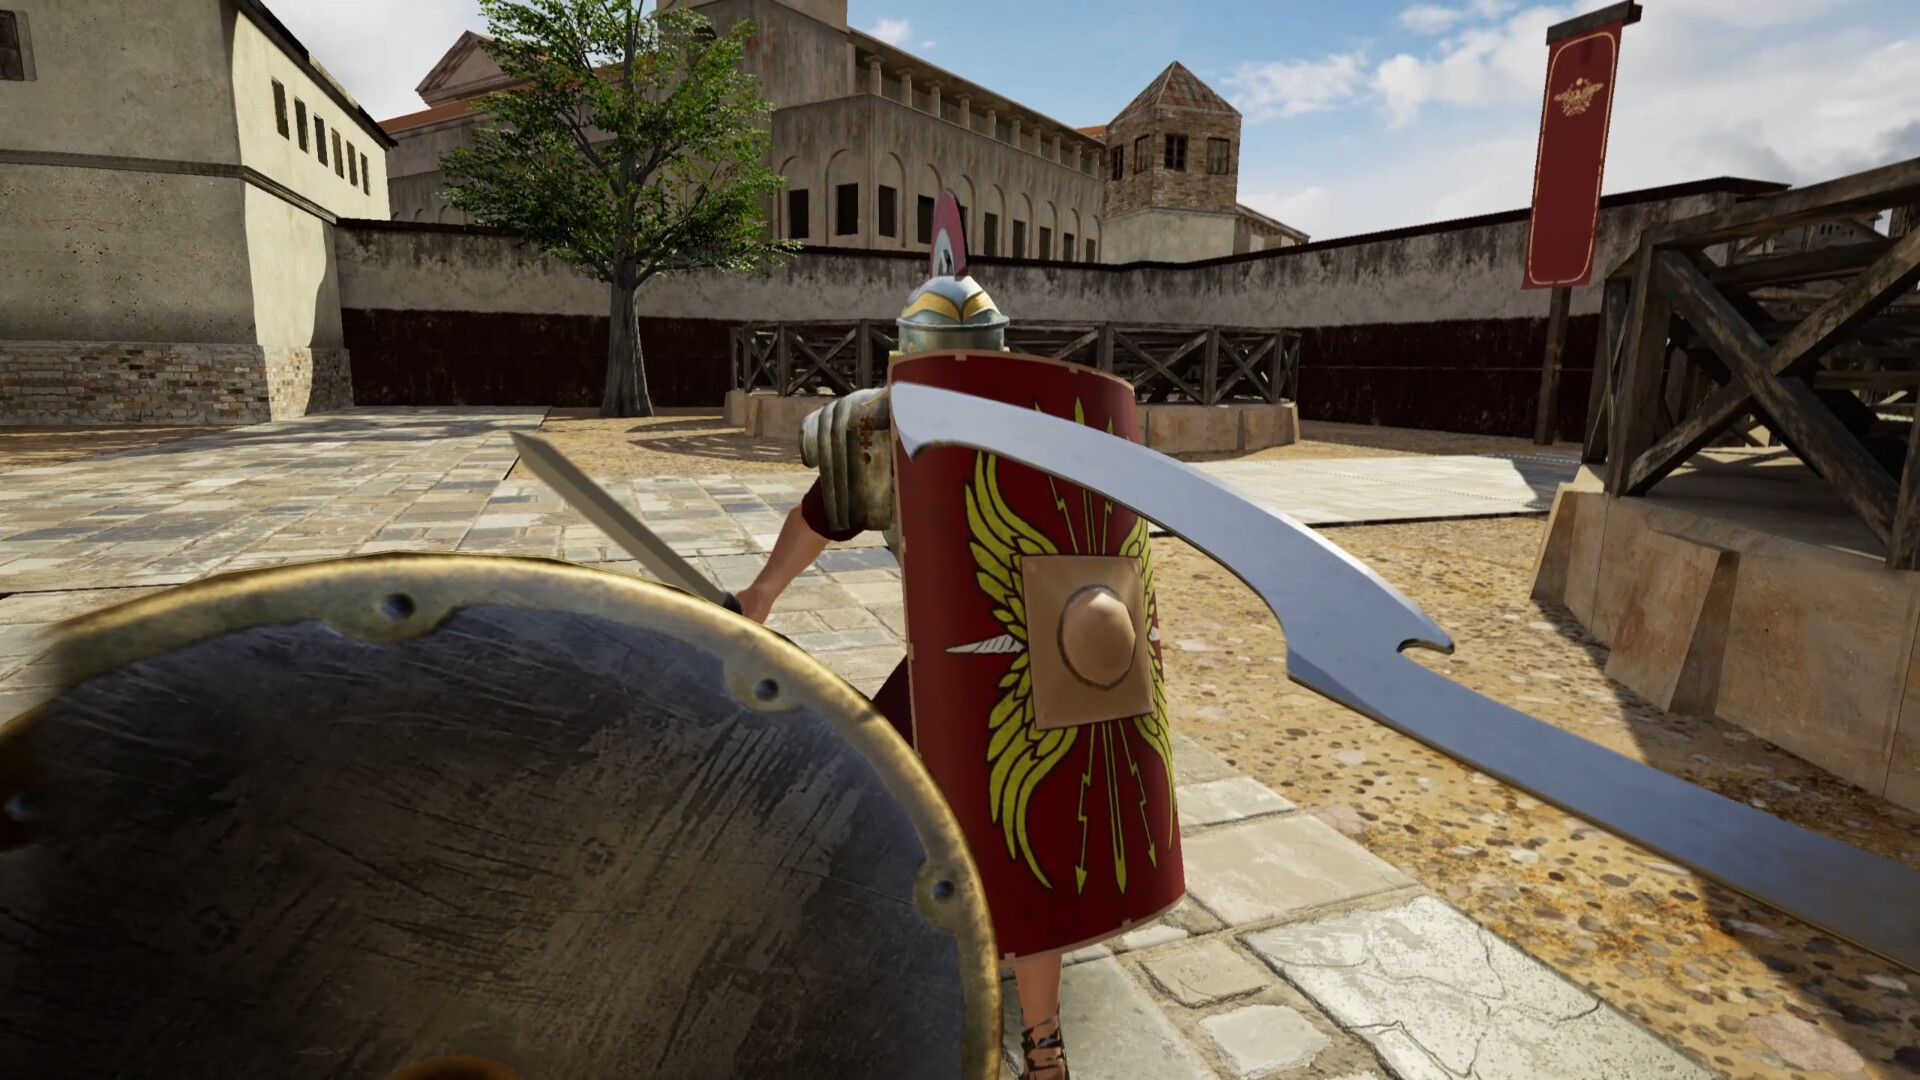 Gladius | Gladiator VR Sword fighting Free Download